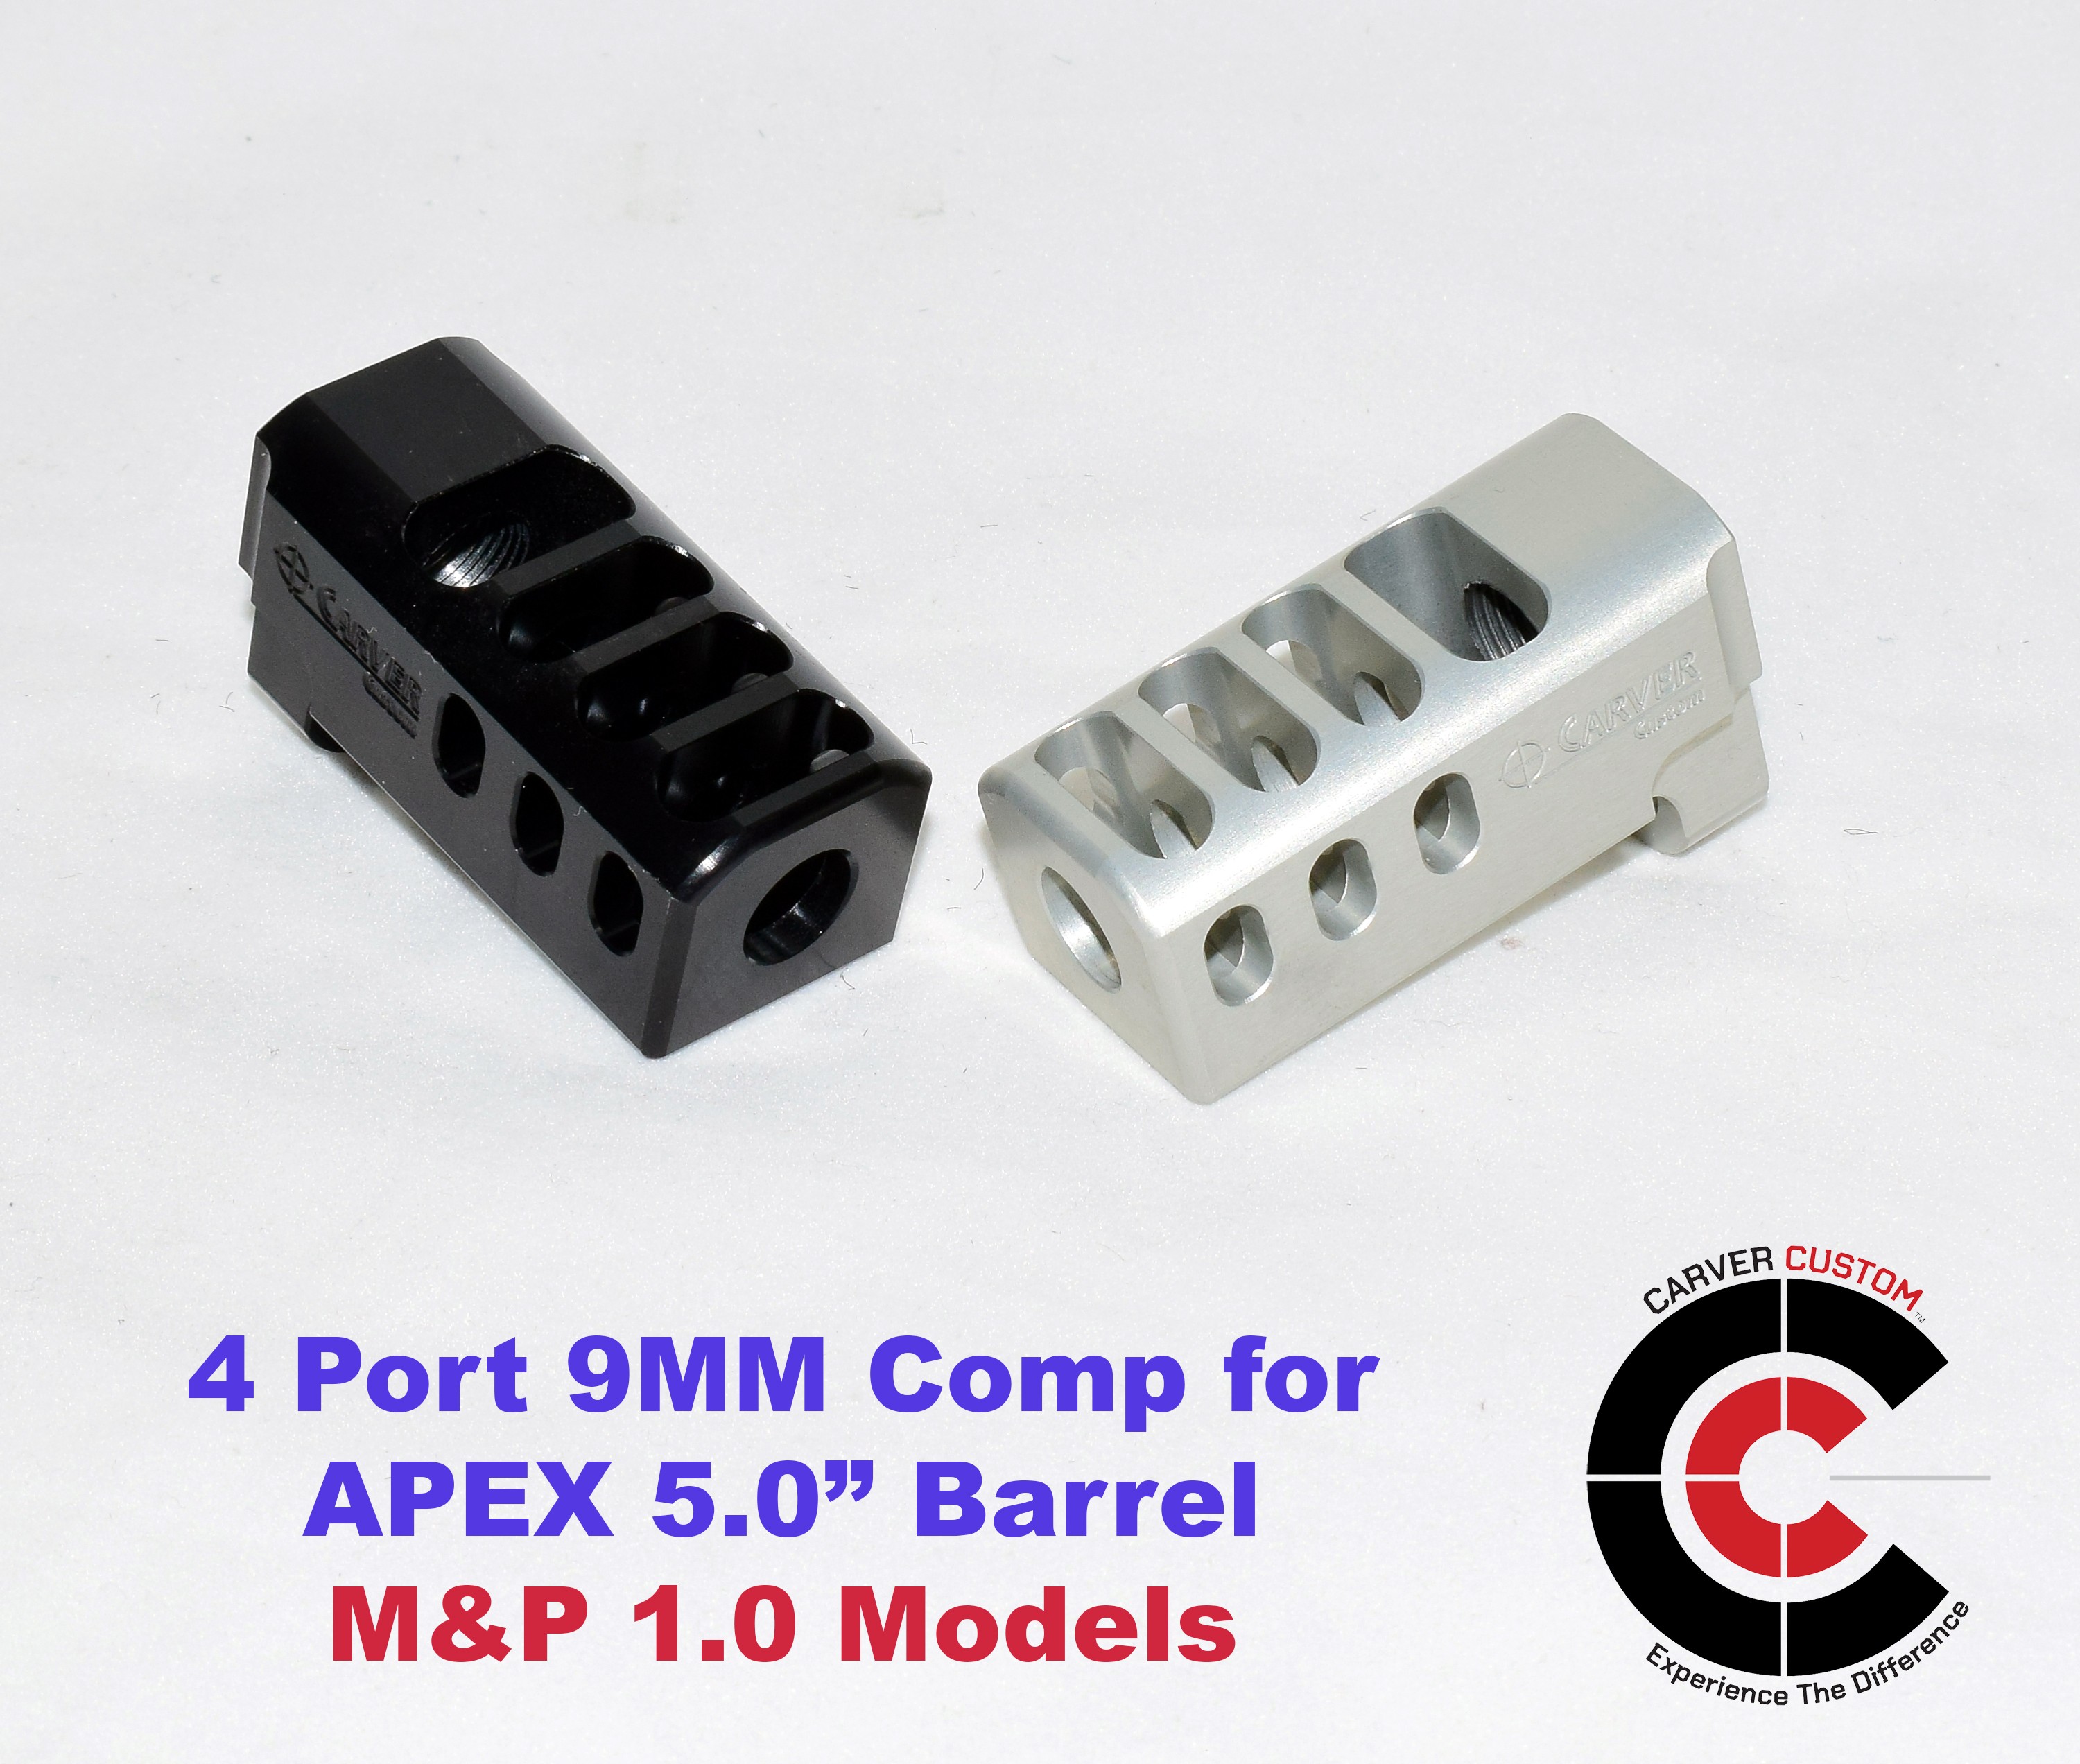 CARVER 4 Port Comp for 1.0 M&P APEX 5.0" (9MM)